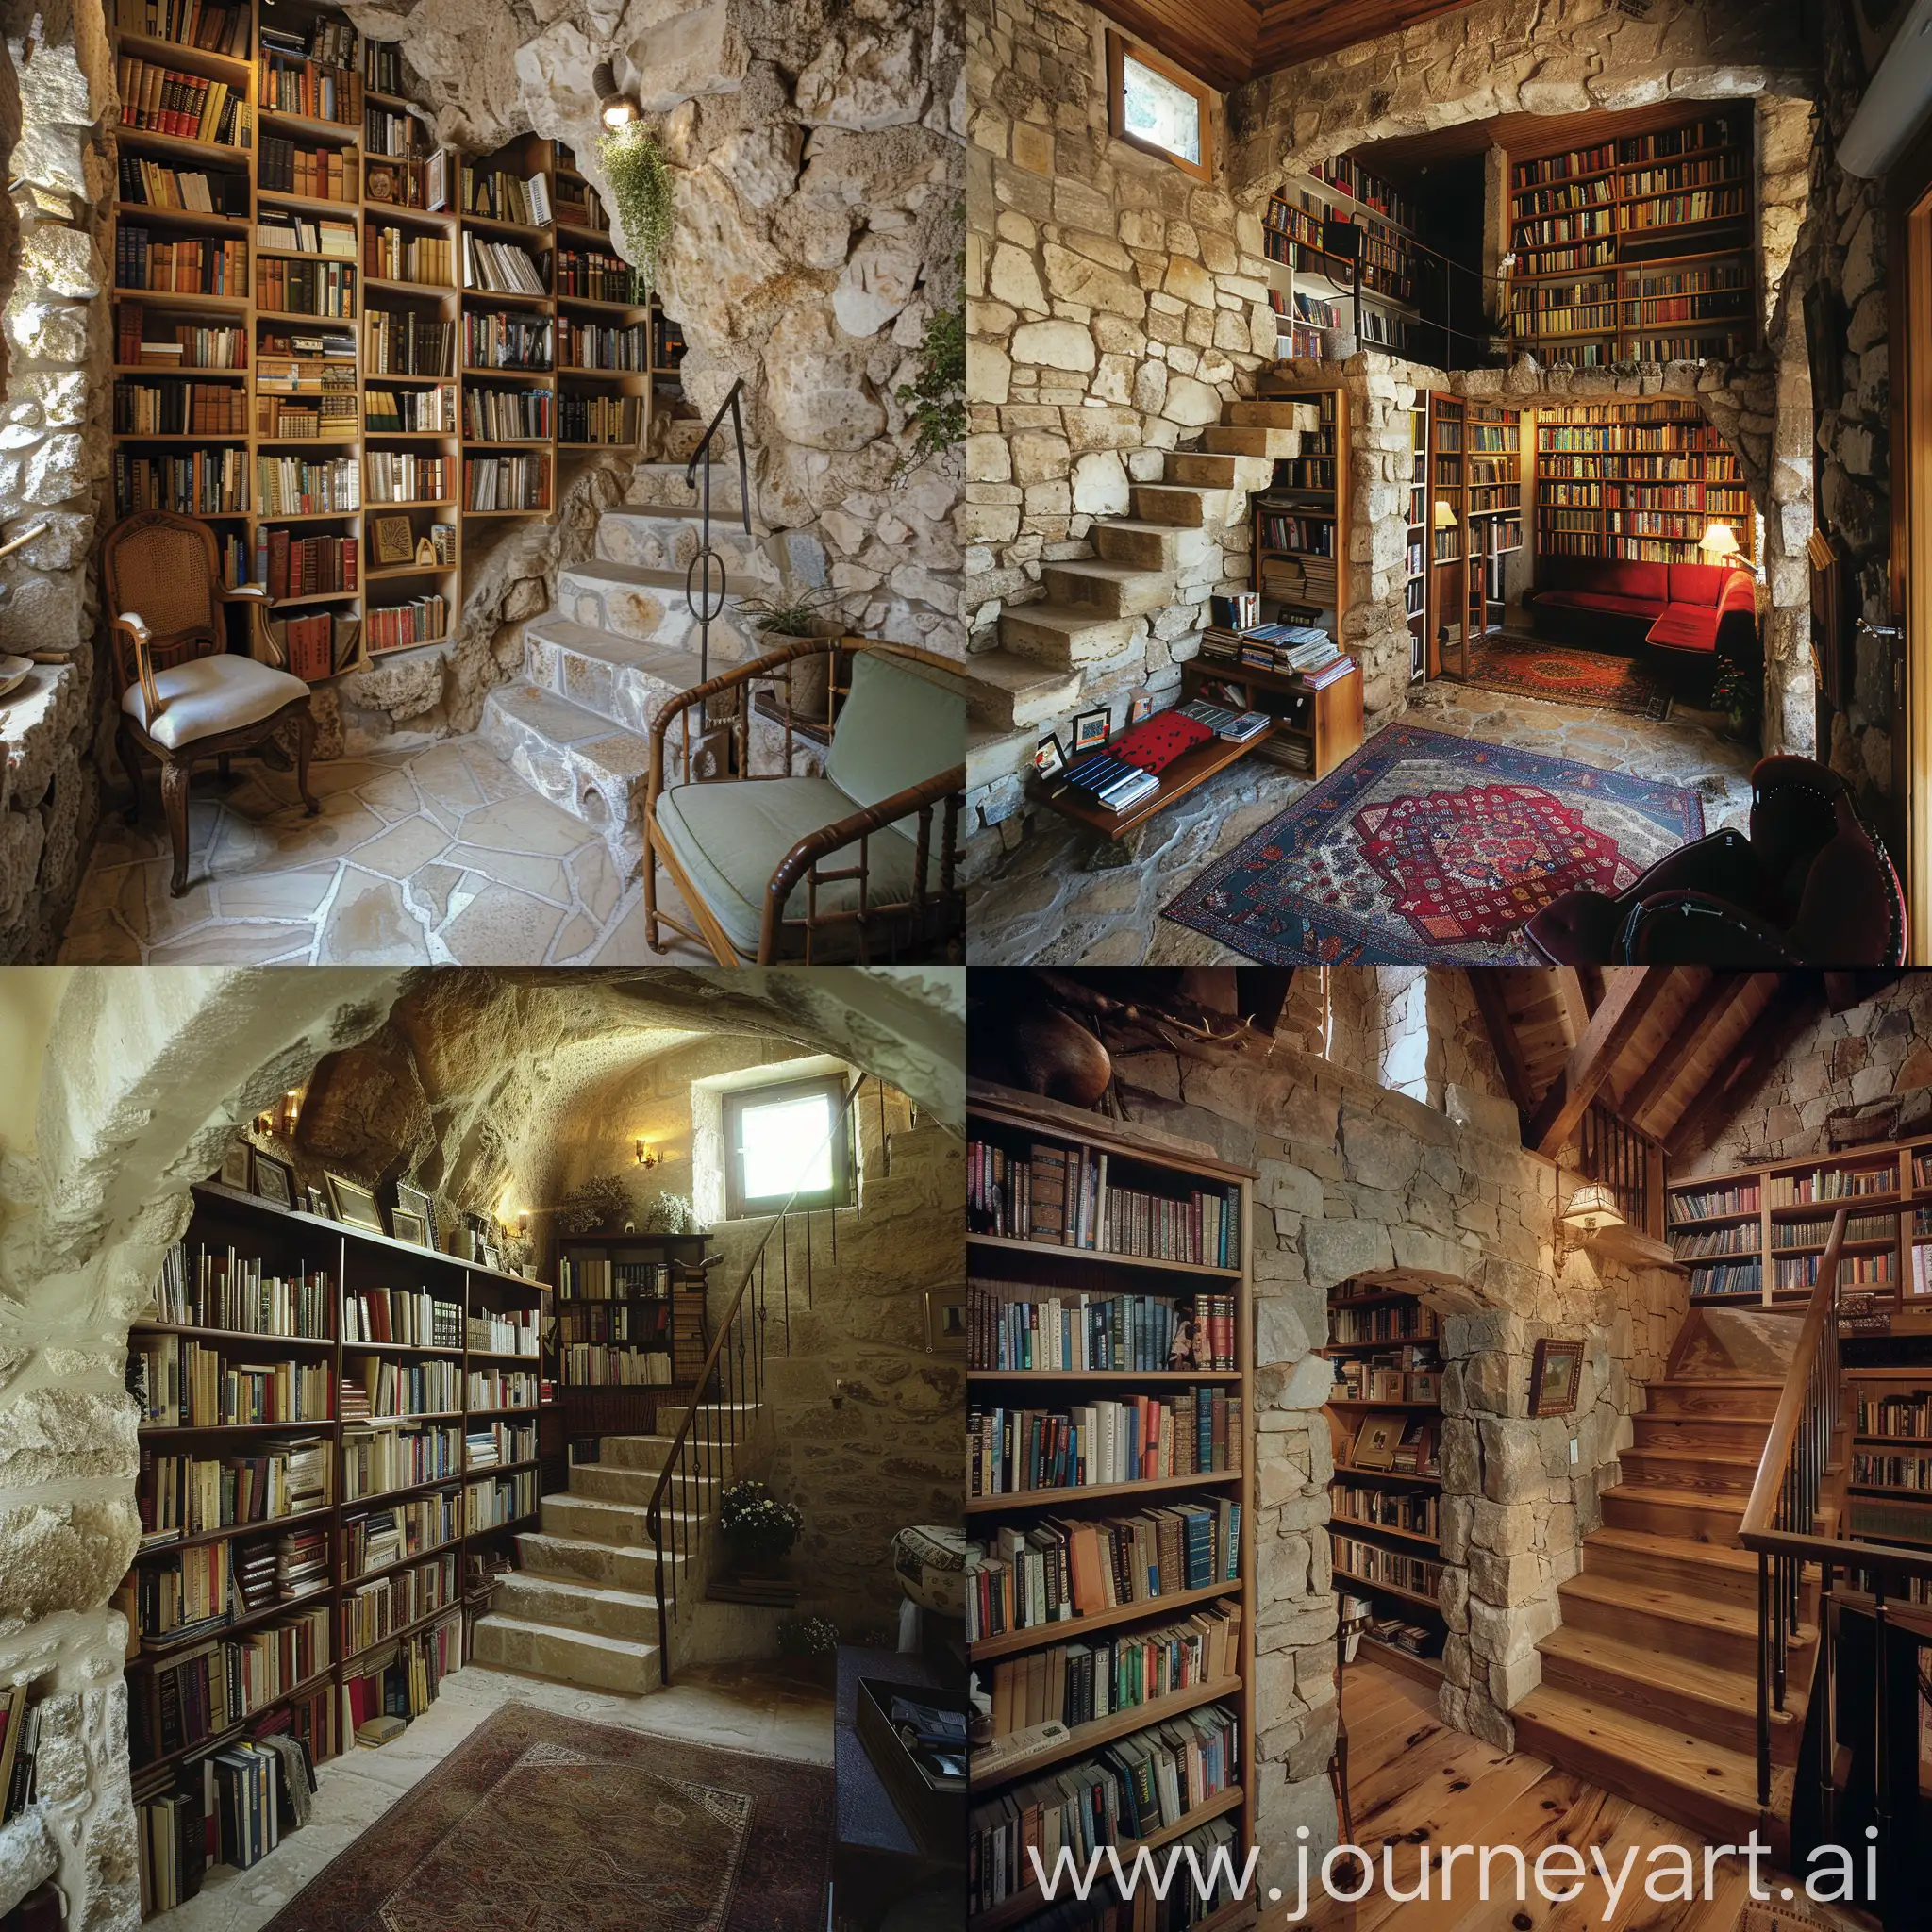 Cozy-Stone-House-Interior-with-Secret-Passage-Bookshelves